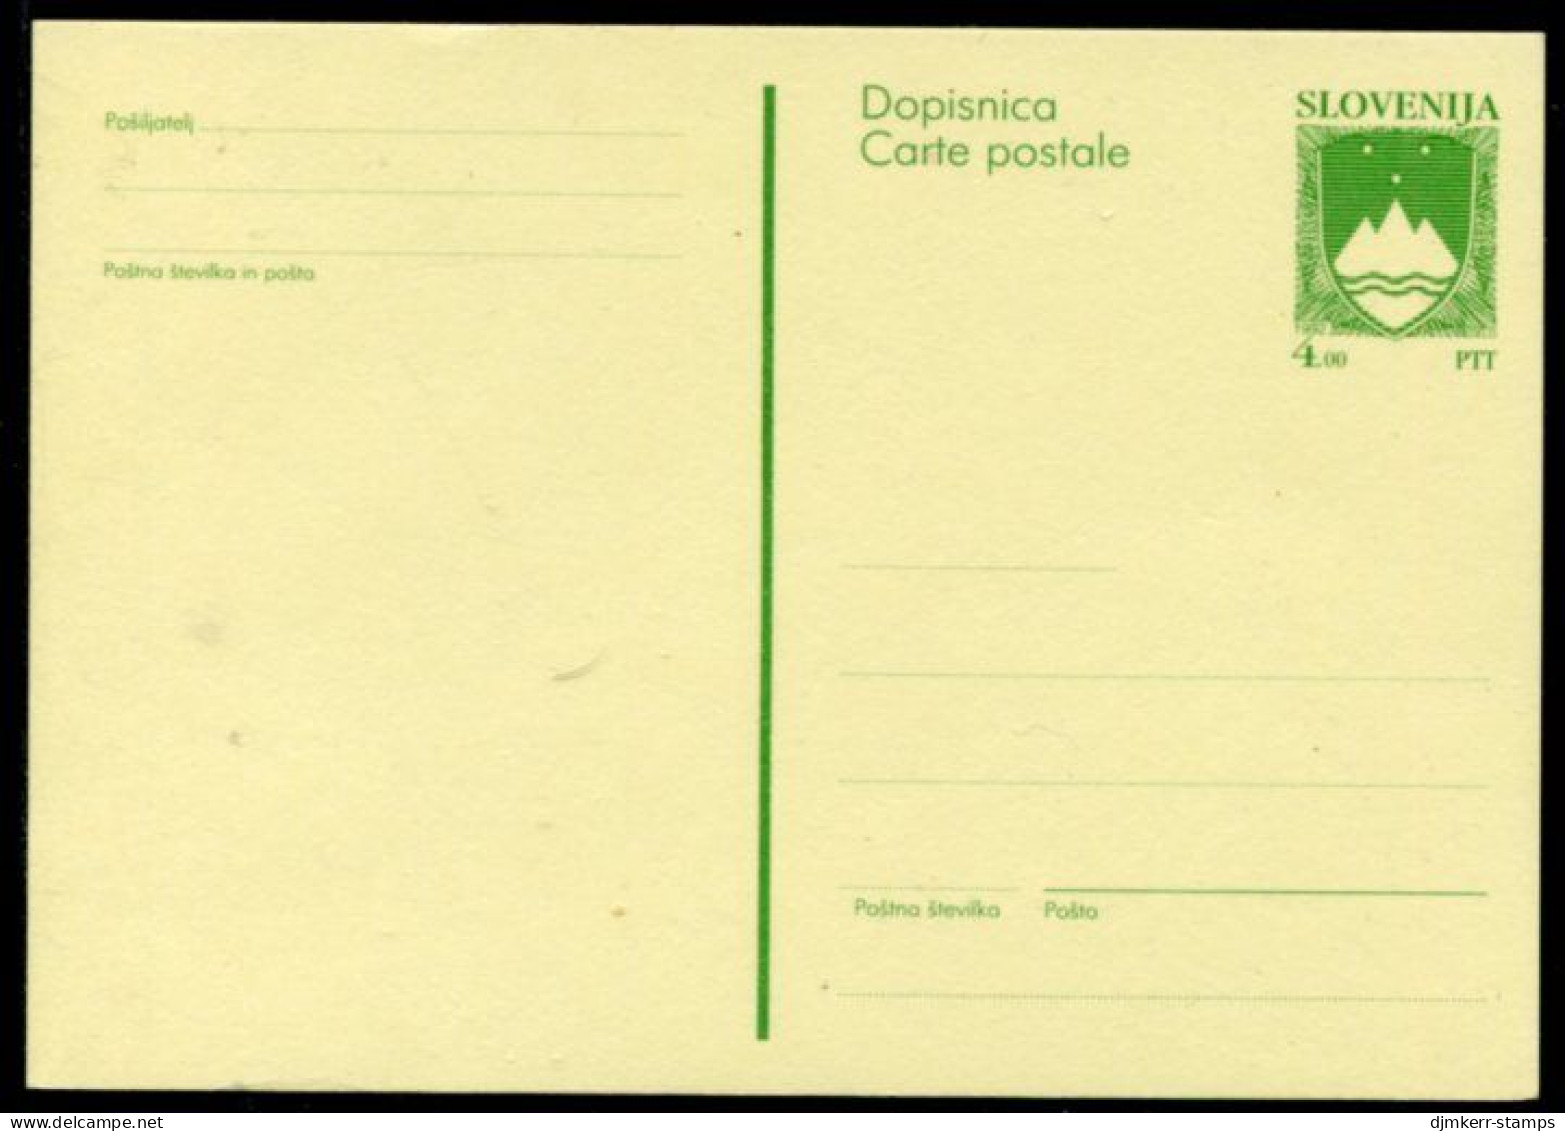 SLOVENIA 1992 4.00 T.  Arms  Stationery Card, Unused.   Michel P1 - Slovenia